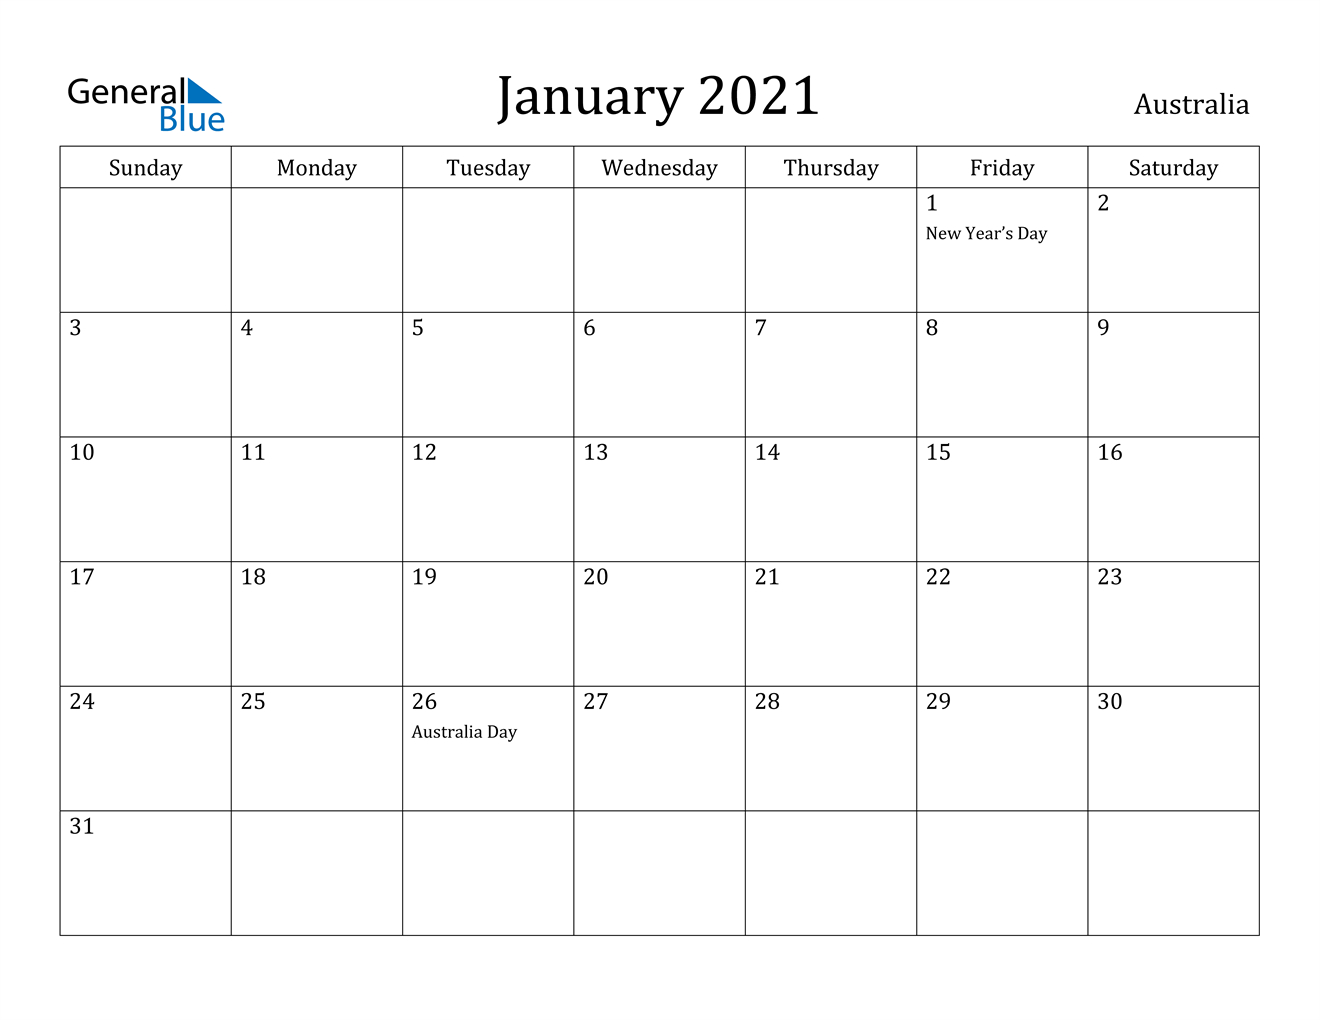 January 2021 Calendar - Australia